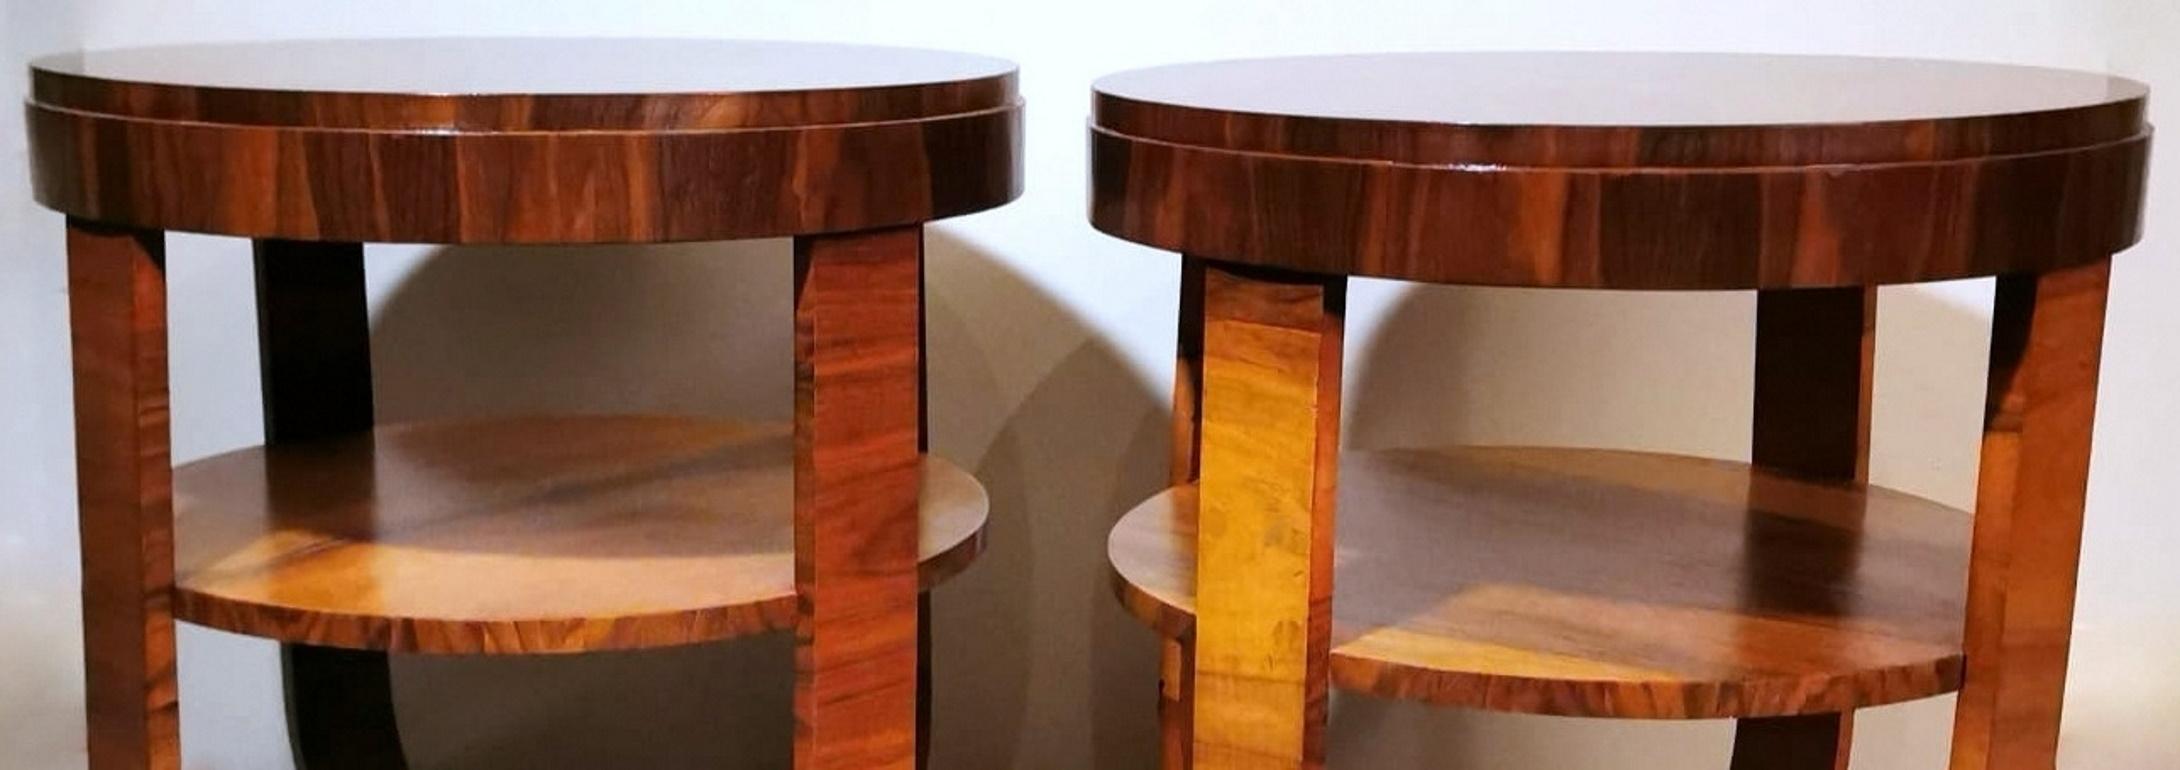 20th Century Art Deco Pair of Coffee Tables in Walnut Austria